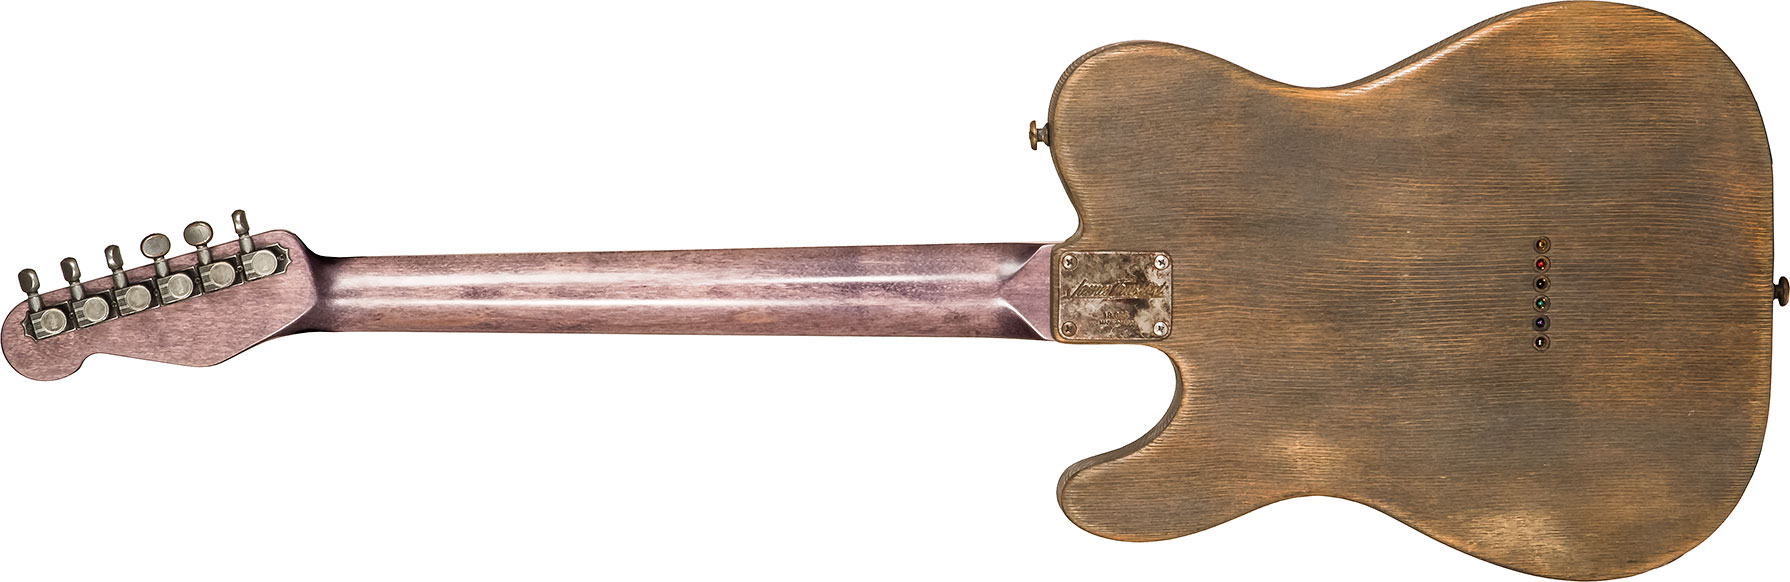 James Trussart Steelguard Caster Sugar Pine Sh Eb #18035 - Rust O Matic Gator Grey Driftwood - Guitare Électrique Forme Tel - Variation 1